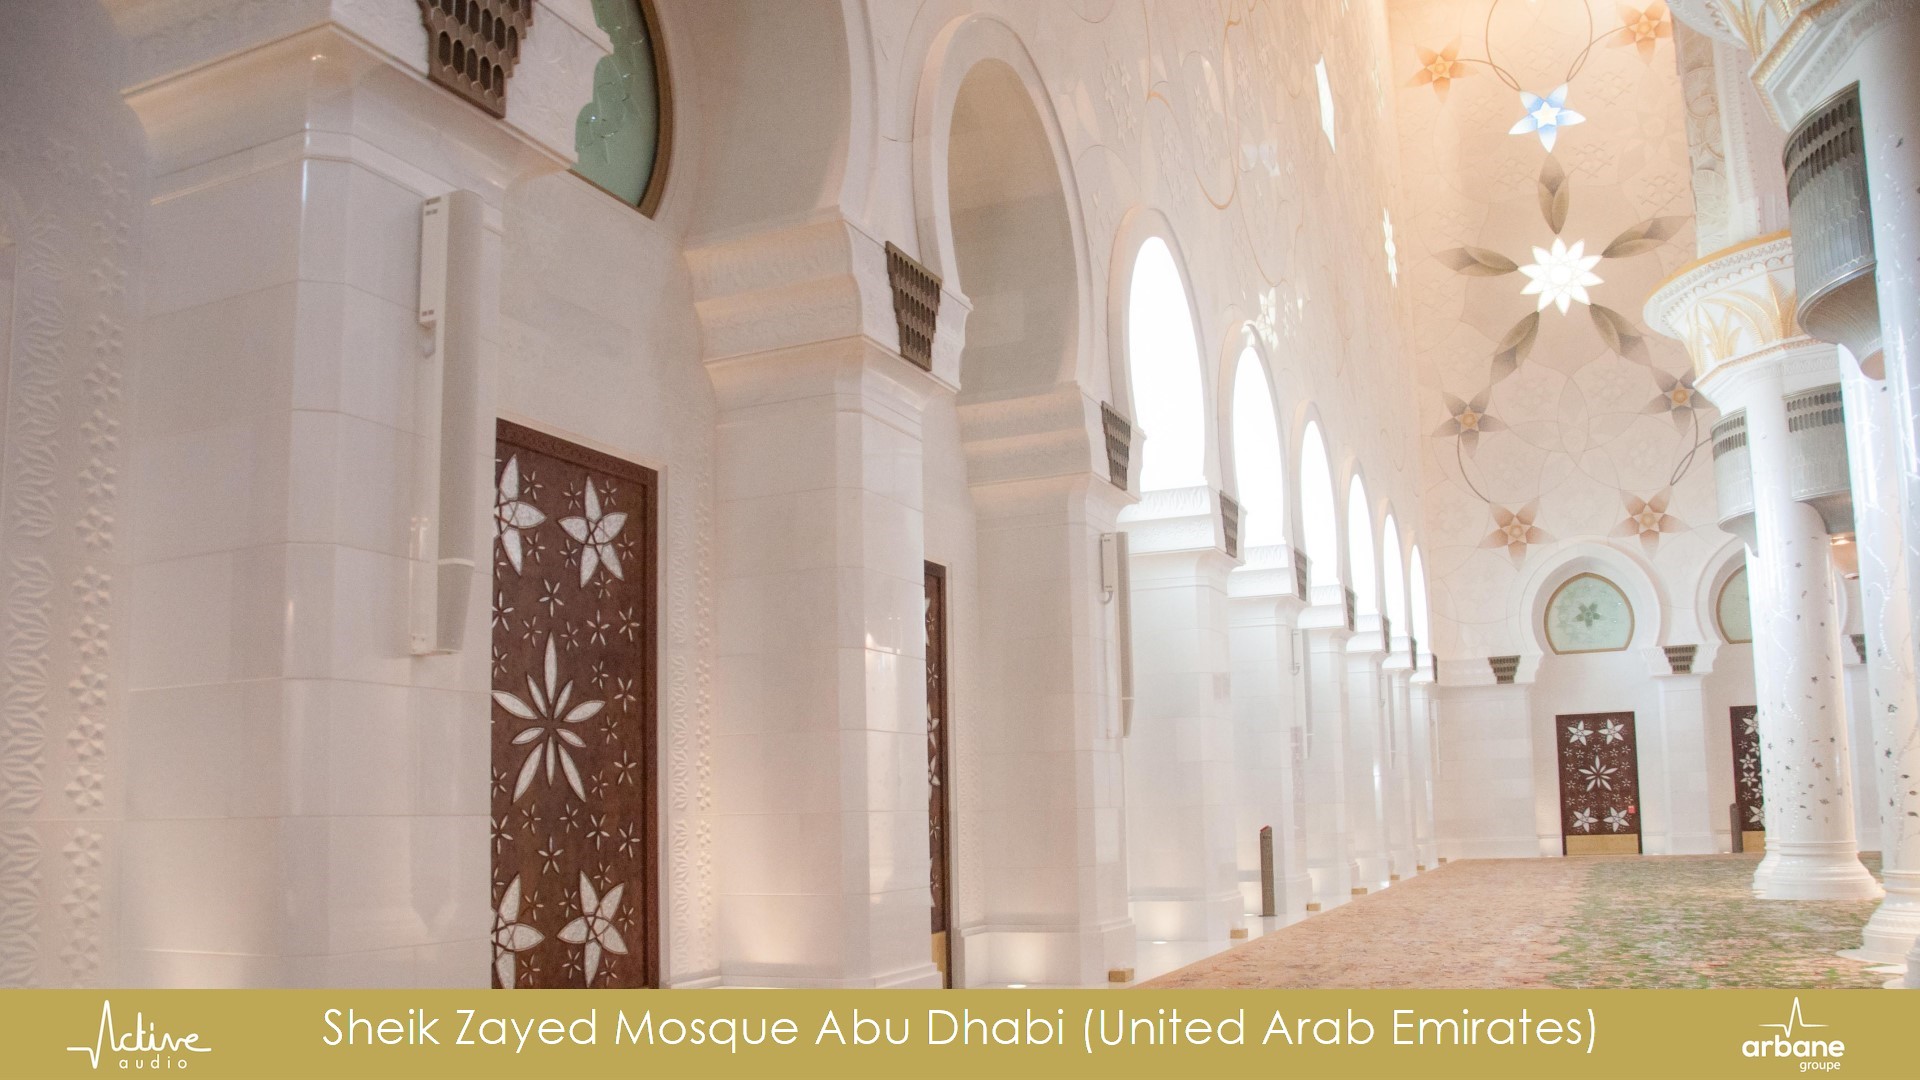 Mosquée Sheikh Zayed d'Abu Dhabi, Emirats Arabes Unis